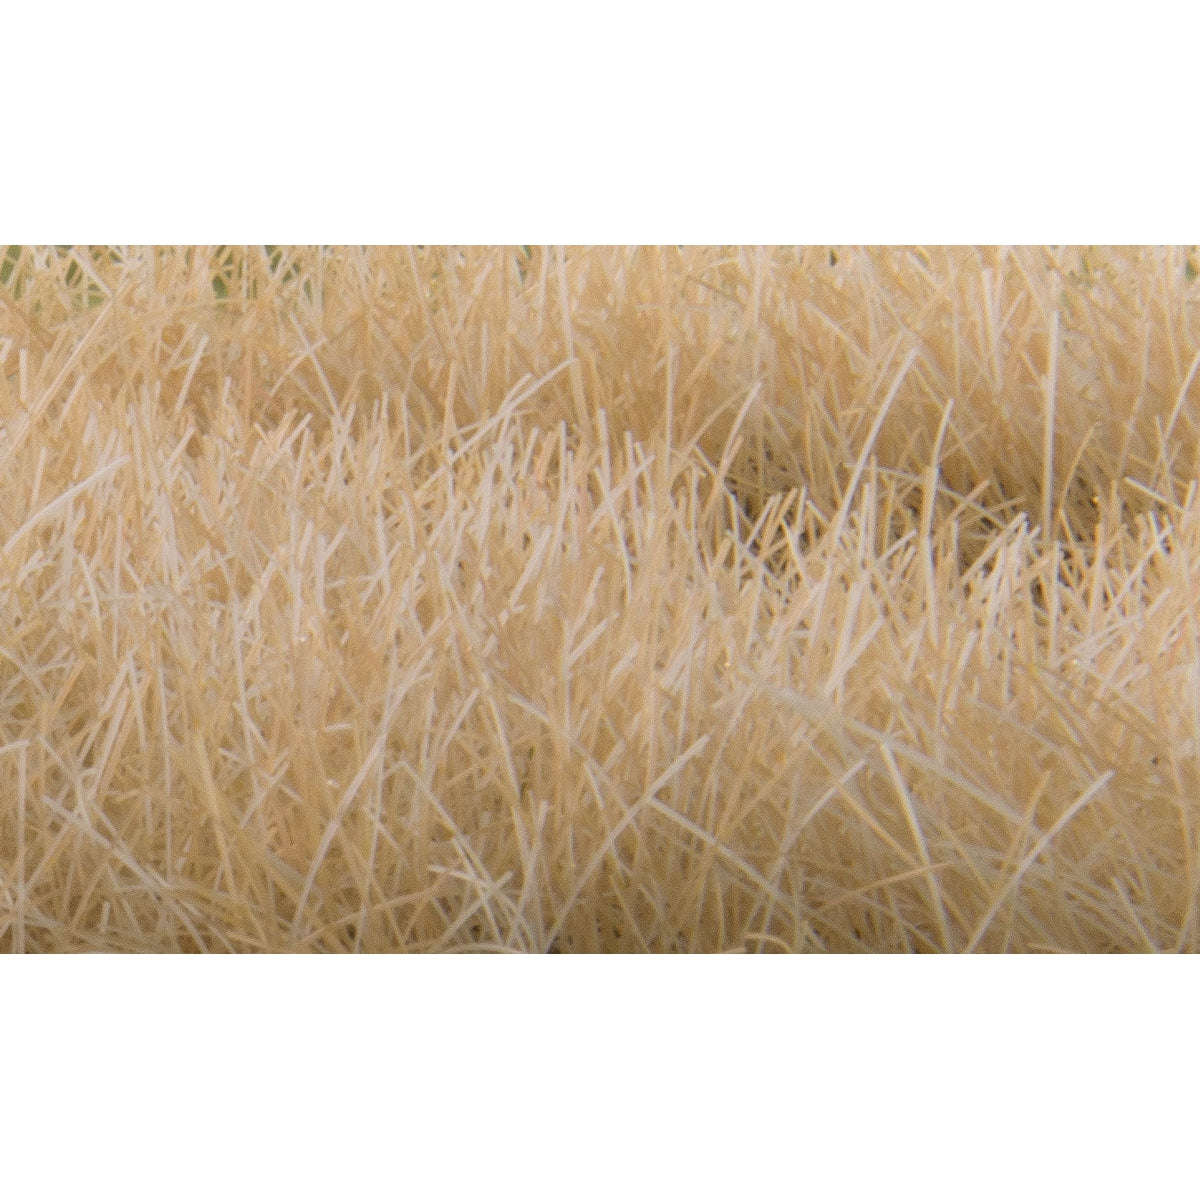 Woodland Scenics Static Grass Straw 12mm